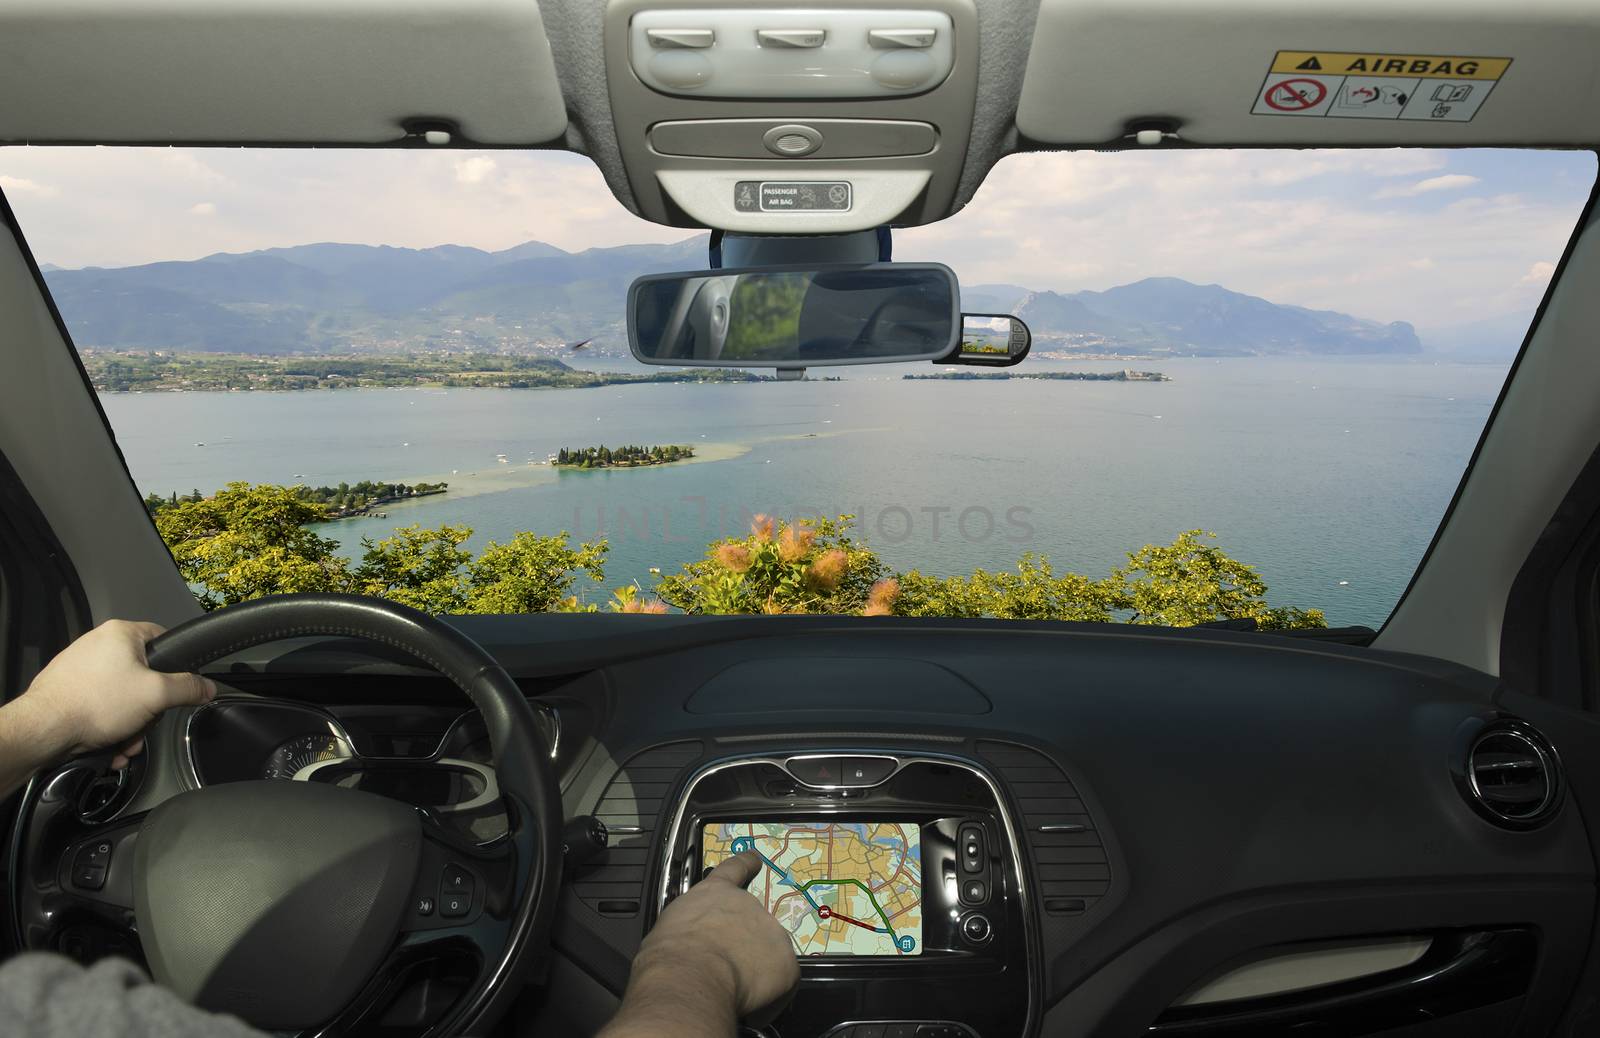 Driving while using navigation system towards Lake Garda, Italy by marcorubino